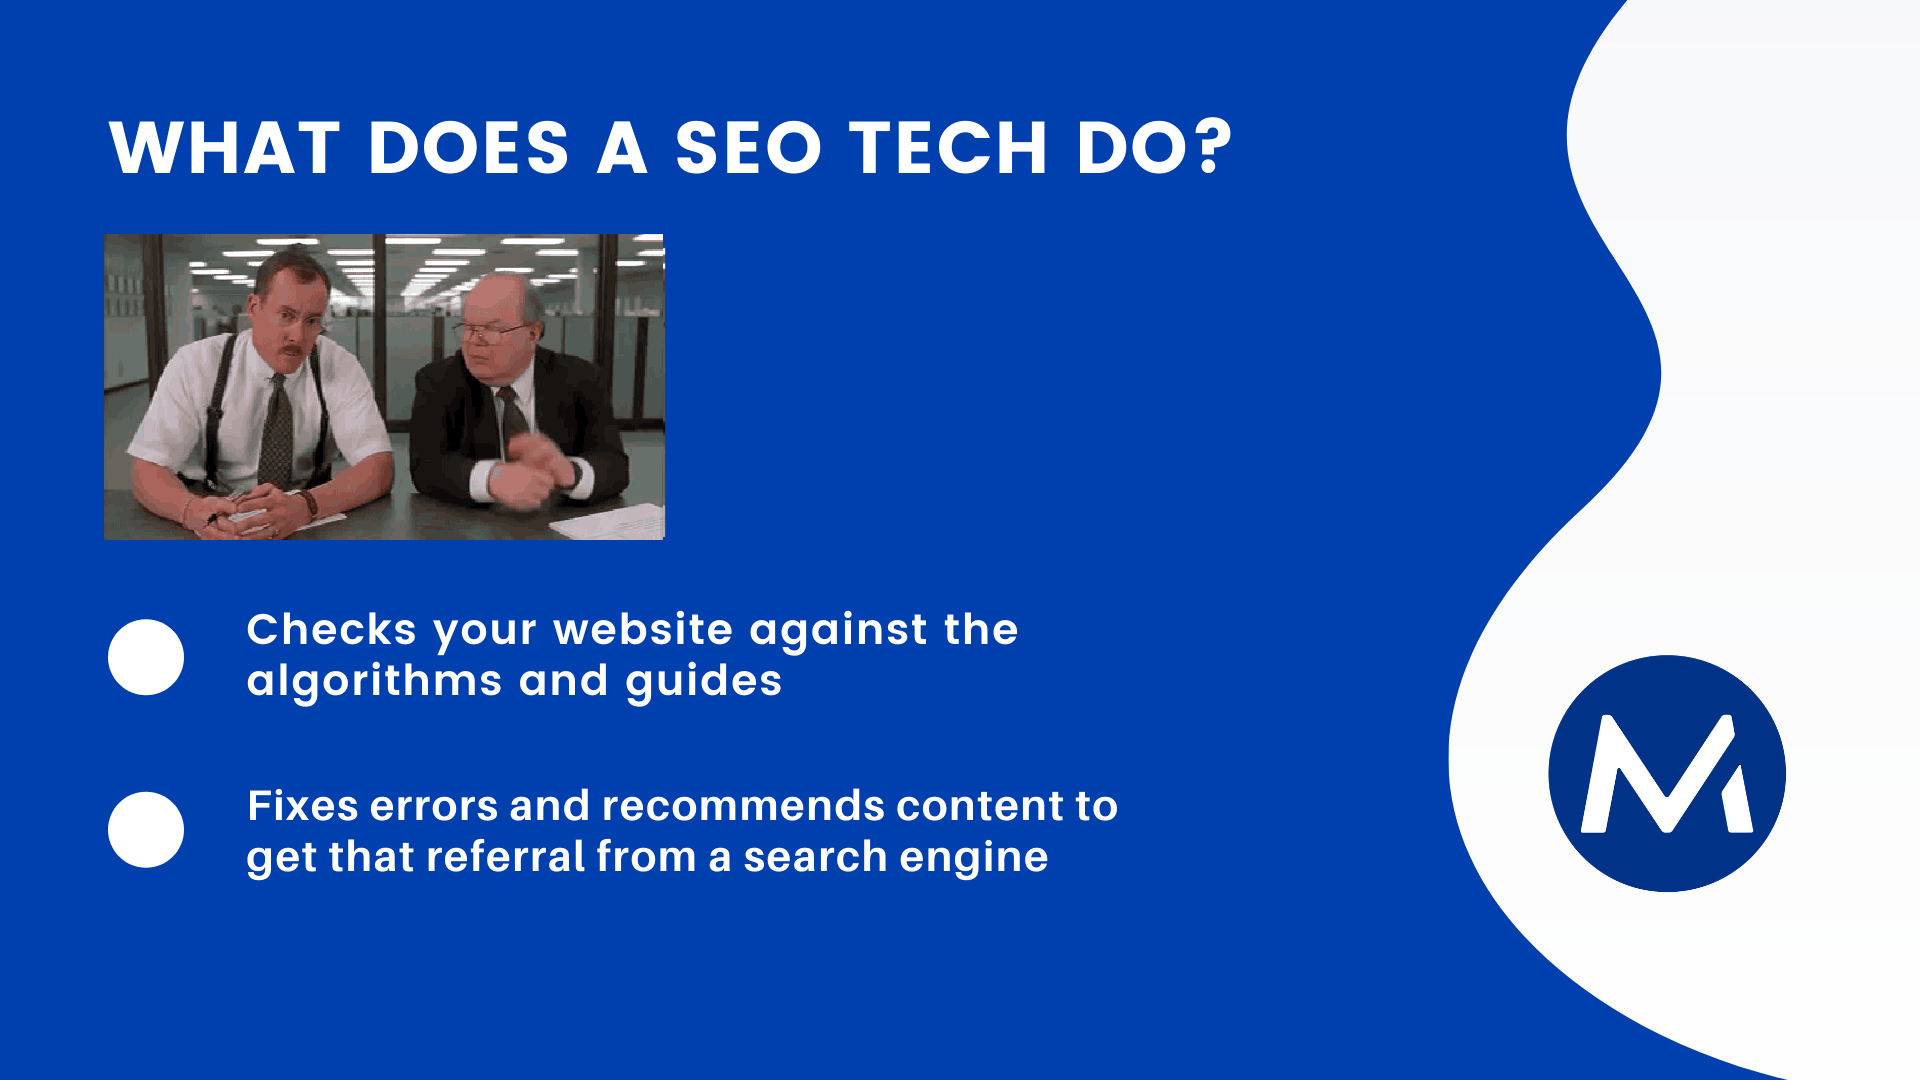 What does an SEO Tech do?